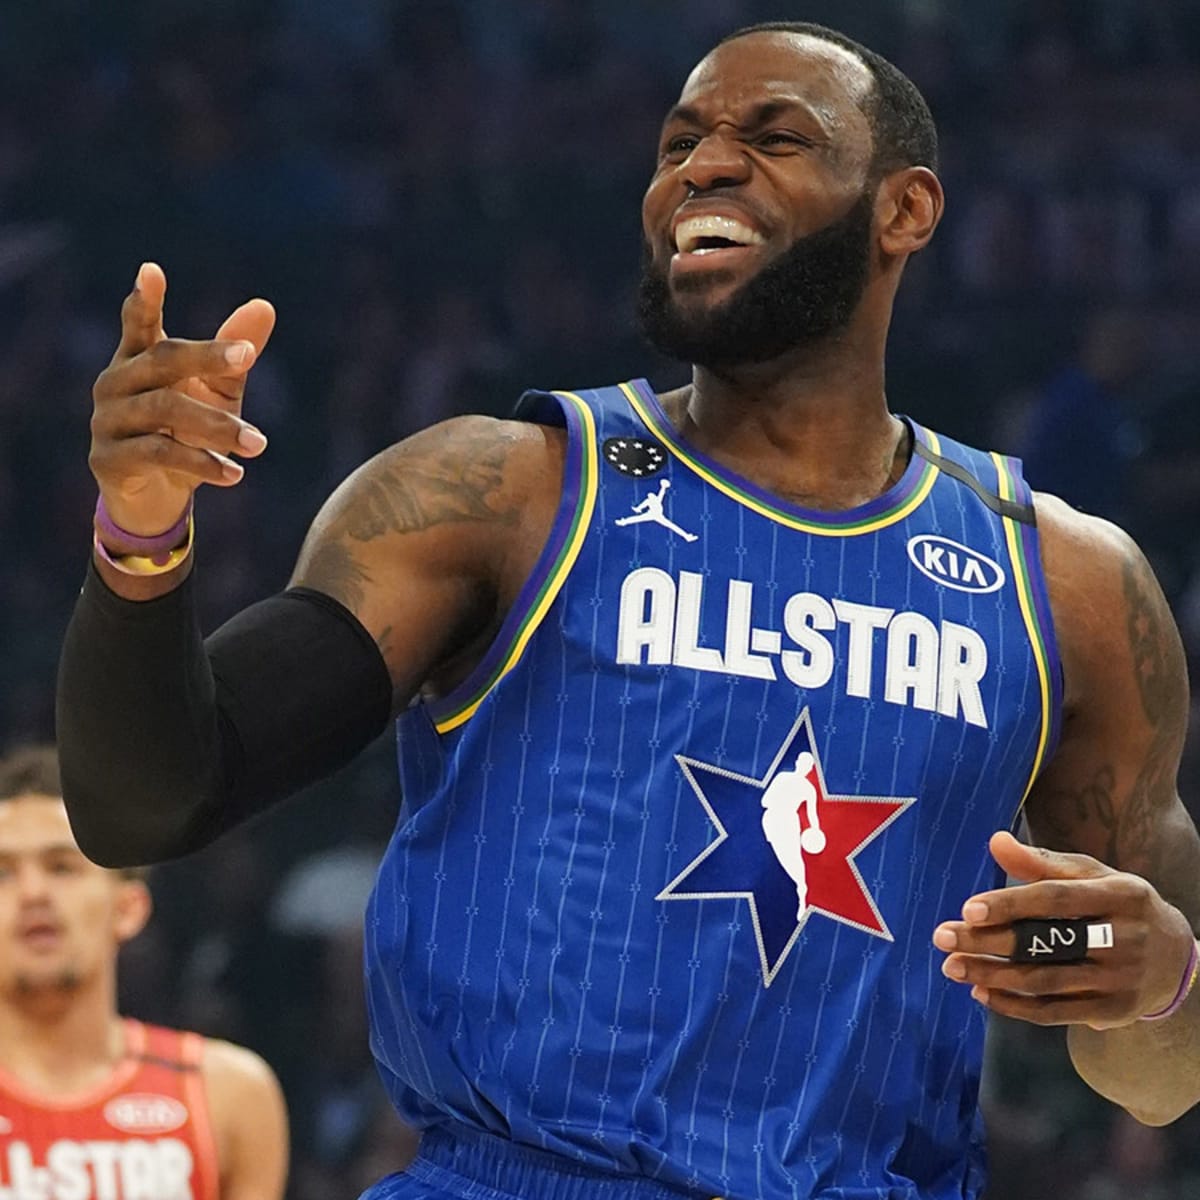 2020 NBA All-Star Game Recap: Team LeBron wins in wild finish